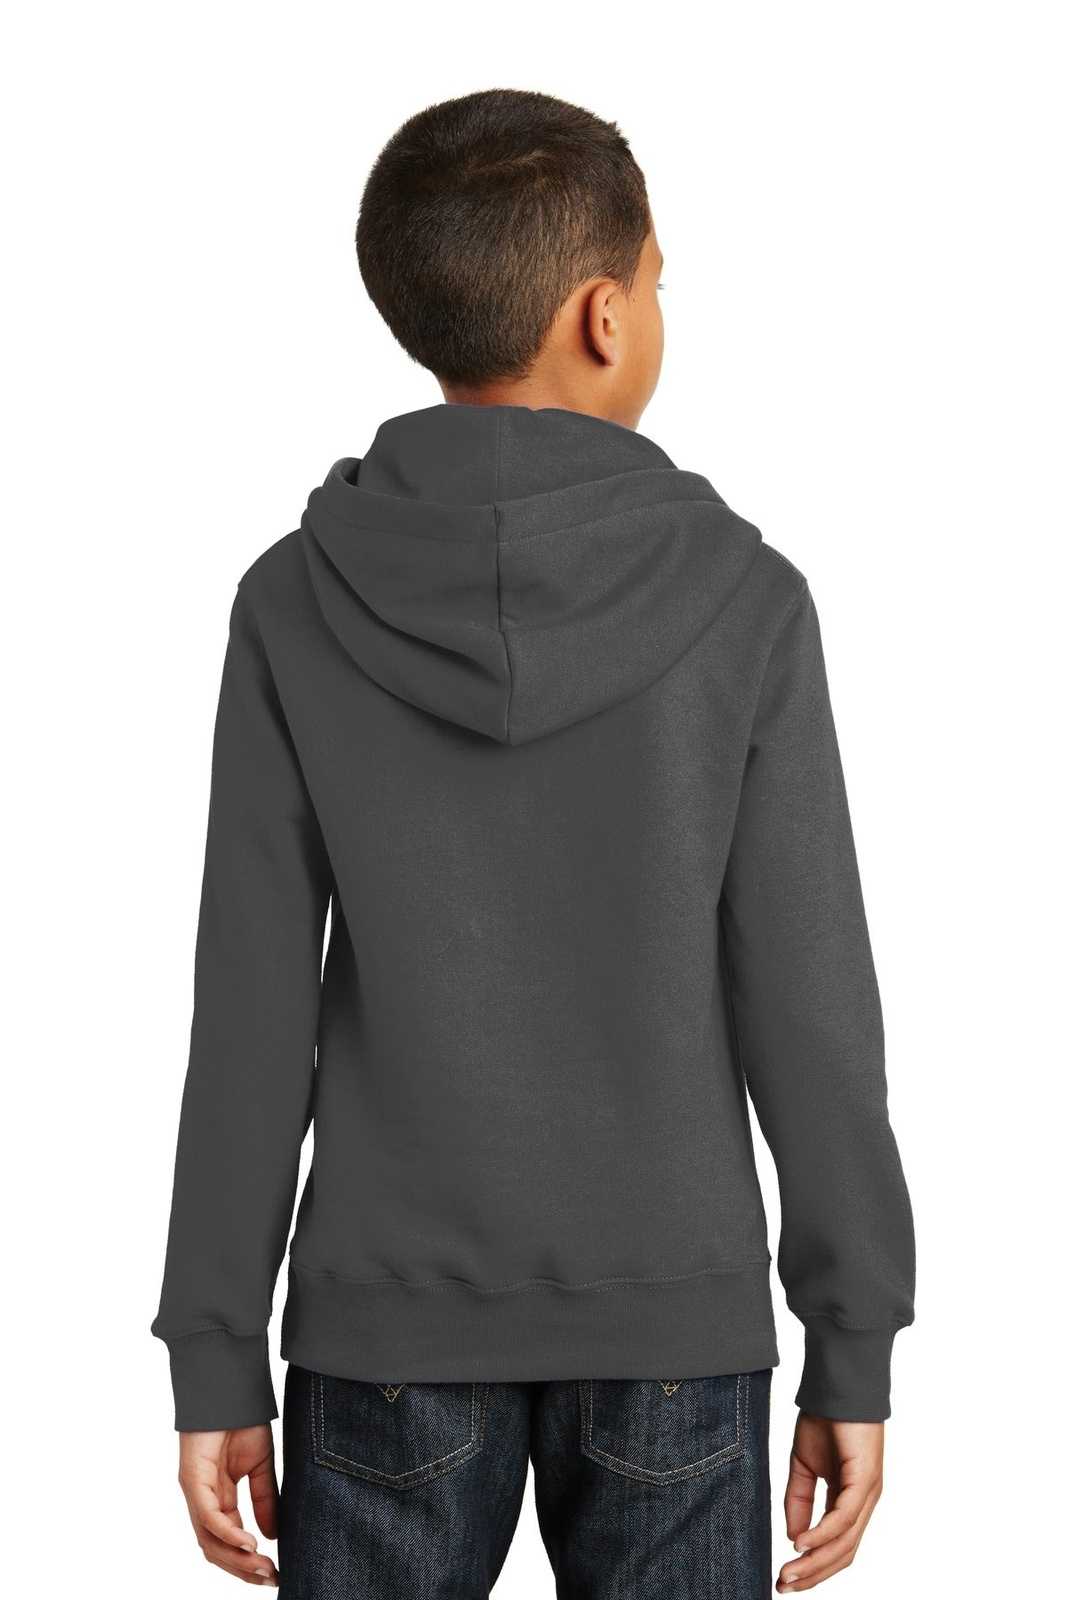 Port & Company PC850YH Youth Fan Favorite Fleece Pullover Hooded Sweatshirt - Charcoal - HIT a Double - 1